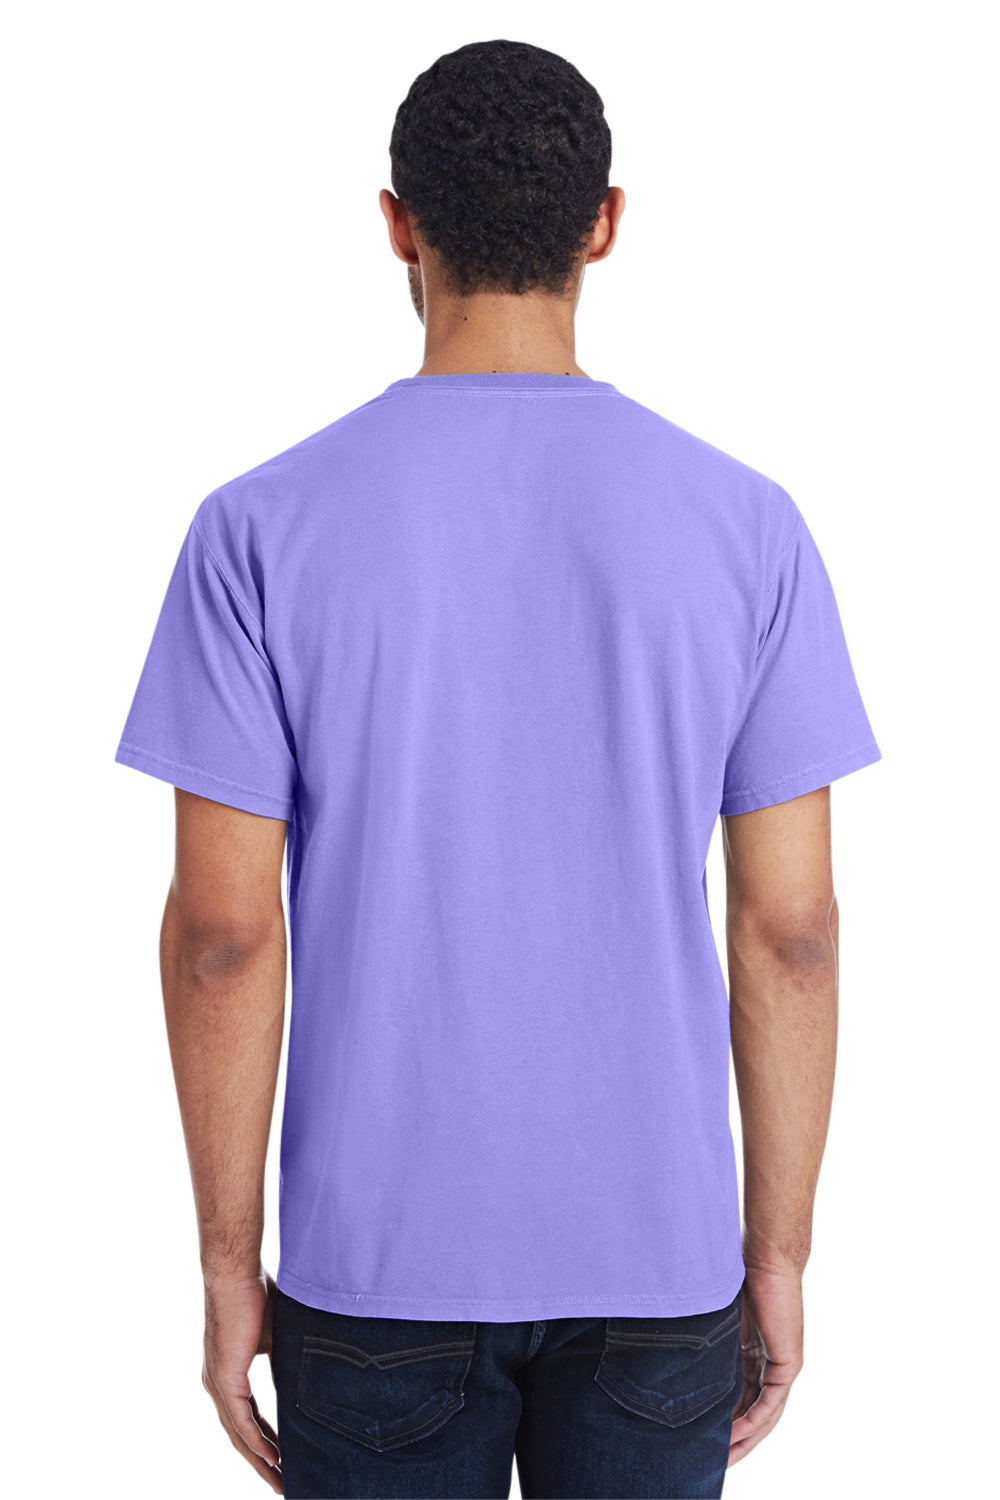 ComfortWash by Hanes GDH150 Short Sleeve Crewneck T-Shirt w/ Pocket Lavender Purple Back